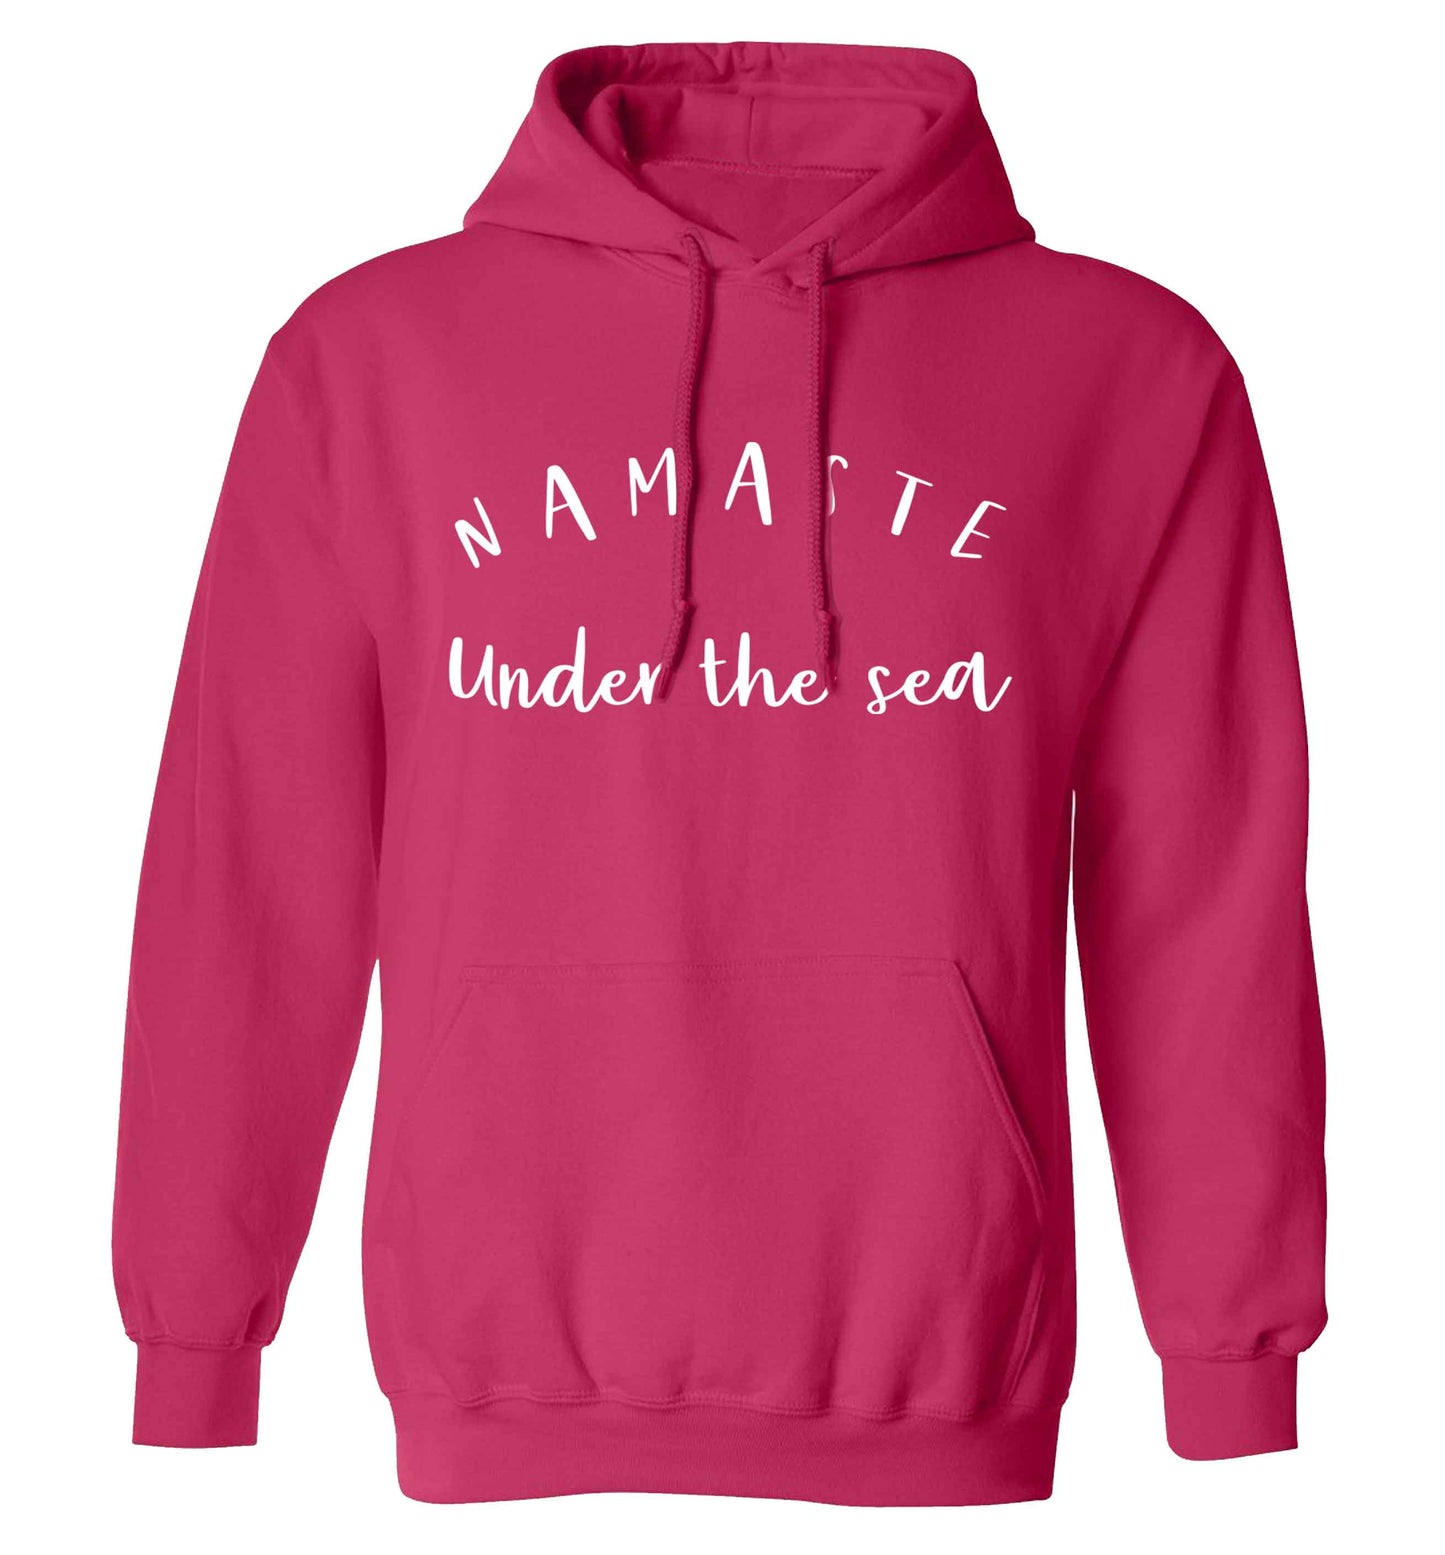 Namaste under the water adults unisex pink hoodie 2XL